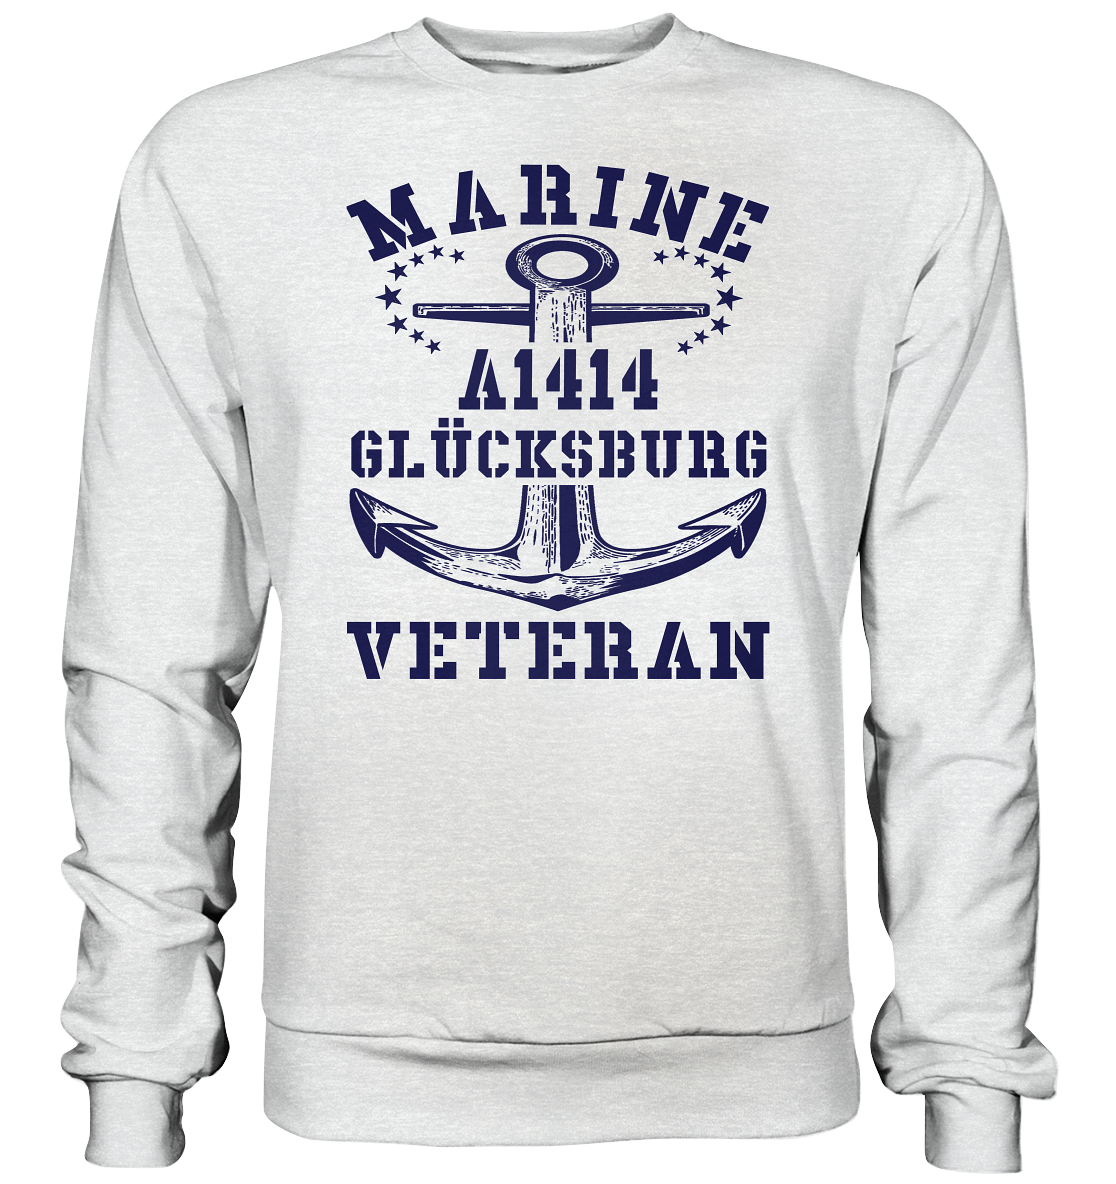 Troßschiff A1414 GLÜCKSBURG Marine Veteran - Premium Sweatshirt